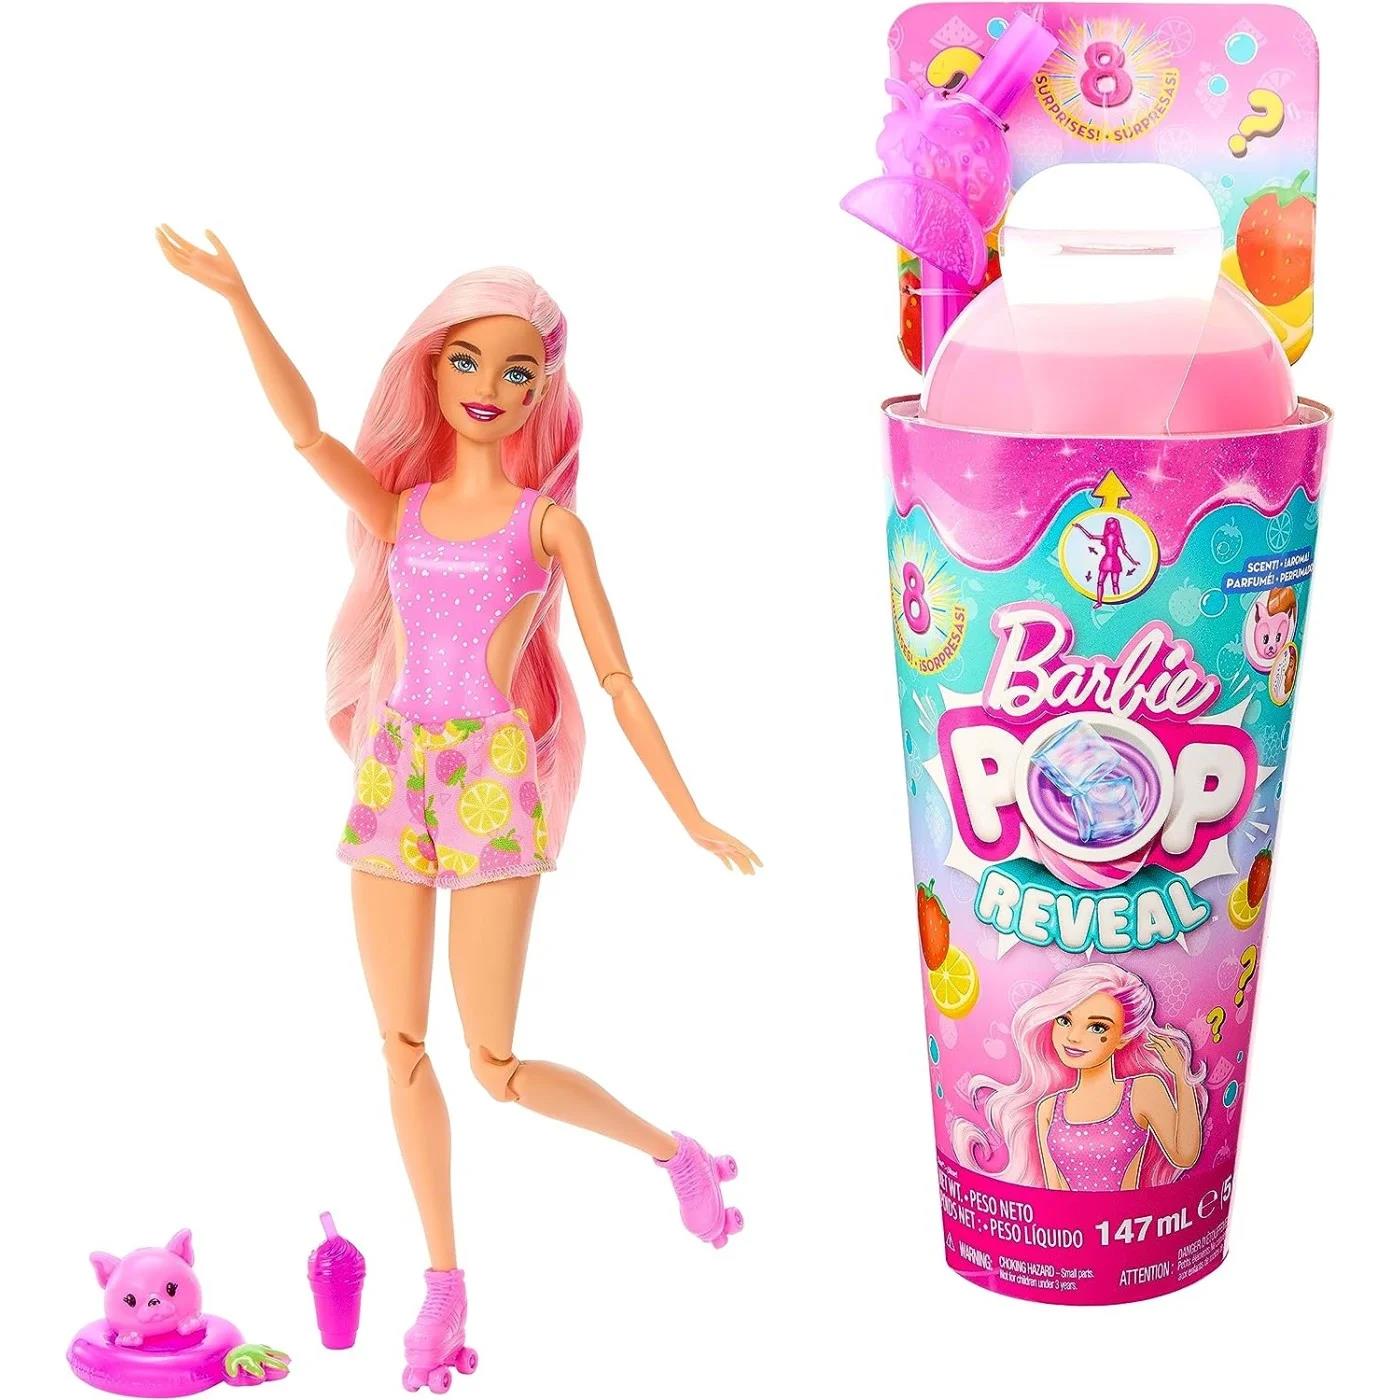 Barbie Pop Reveal Meyve Serisi - Çilek HNW40-HNW41 | Toysall